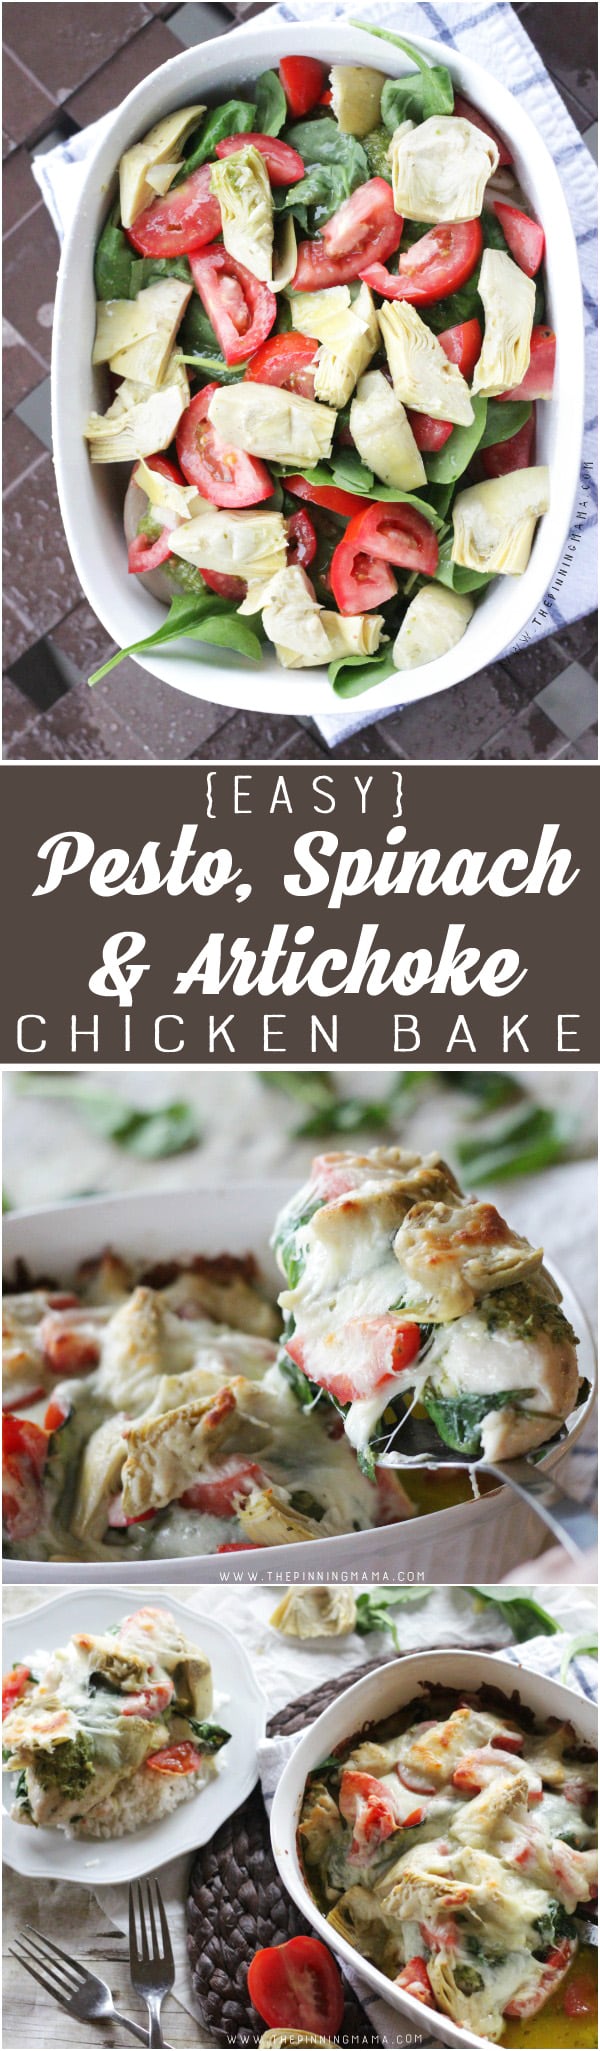 Easy Pesto, Spinach & Artichoke Chicken Bake - Make this 